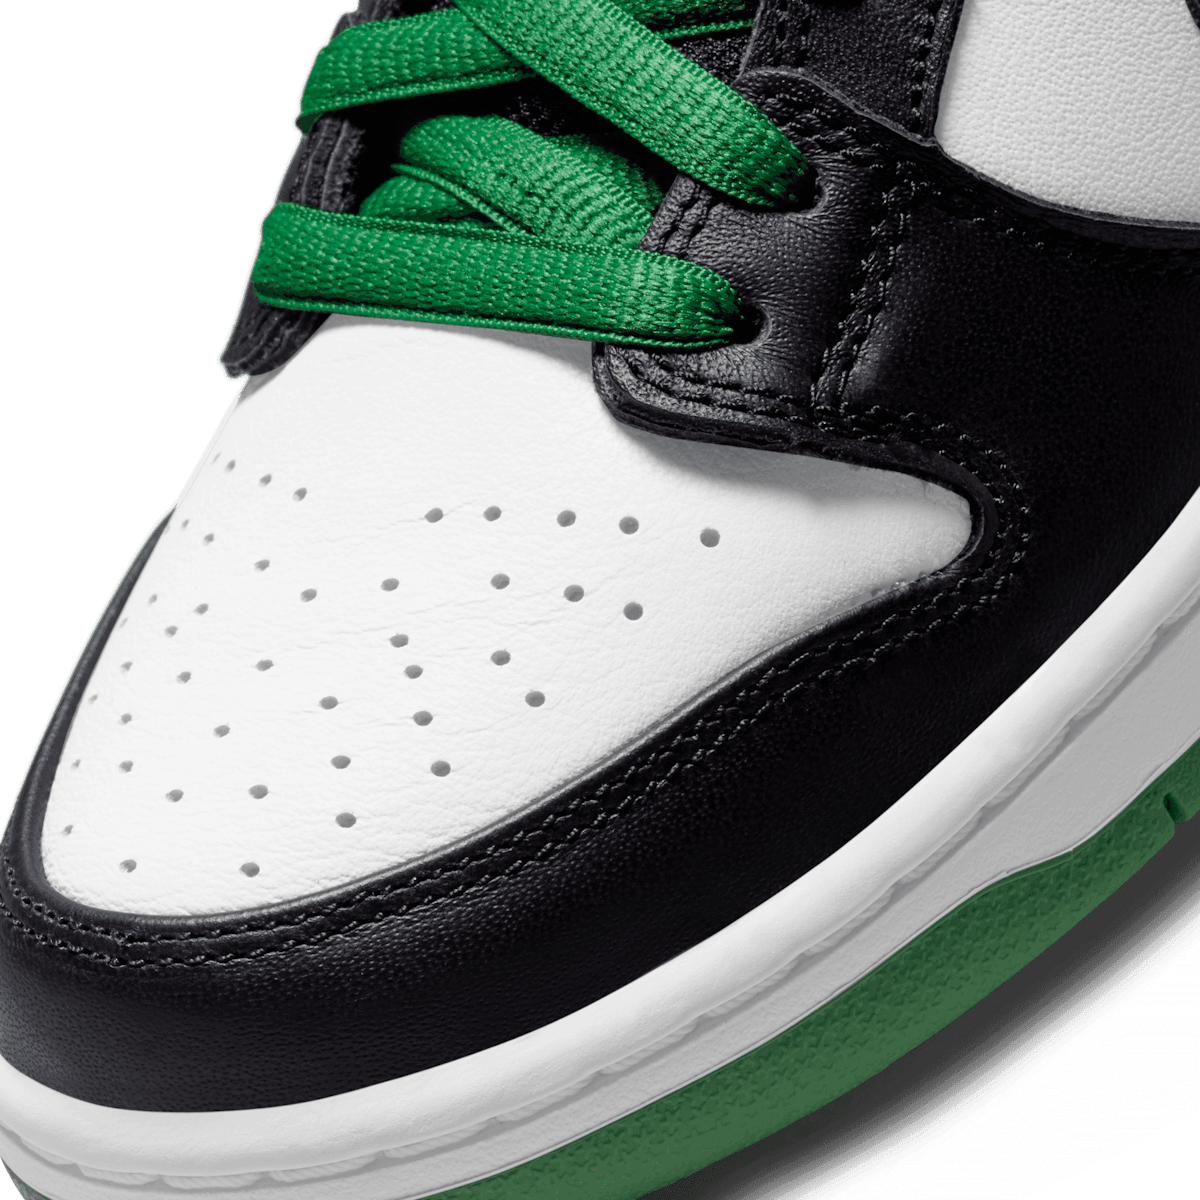 Nike SB Dunk Low Classic Green - BQ6817-302 Raffles and Release Date